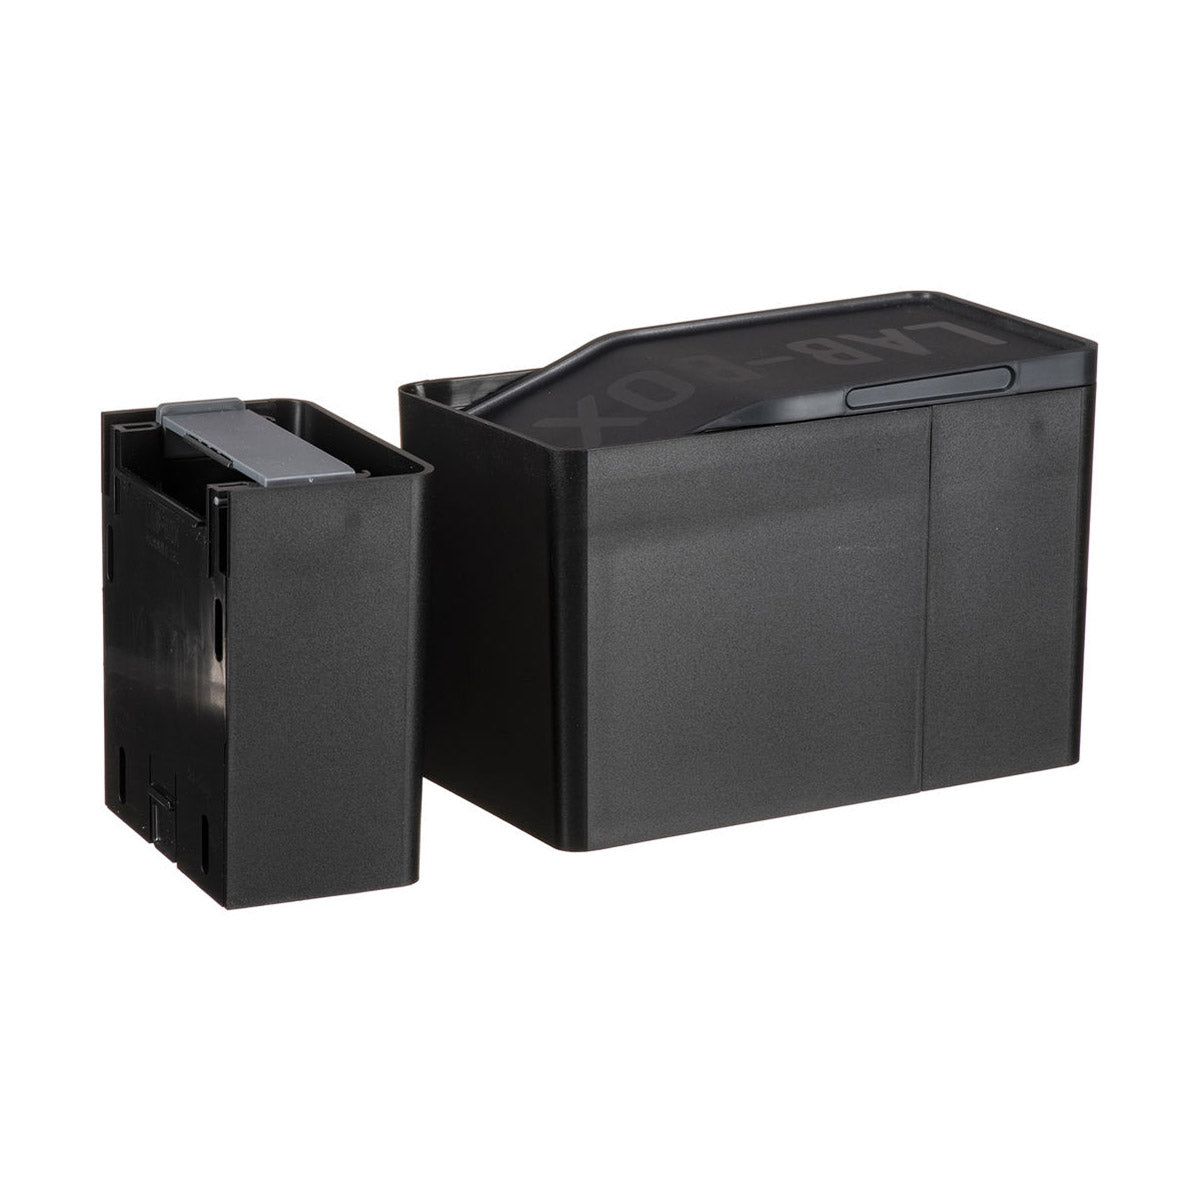 Ars-Imago Lab-Box with 2 Modules (Black Edition)